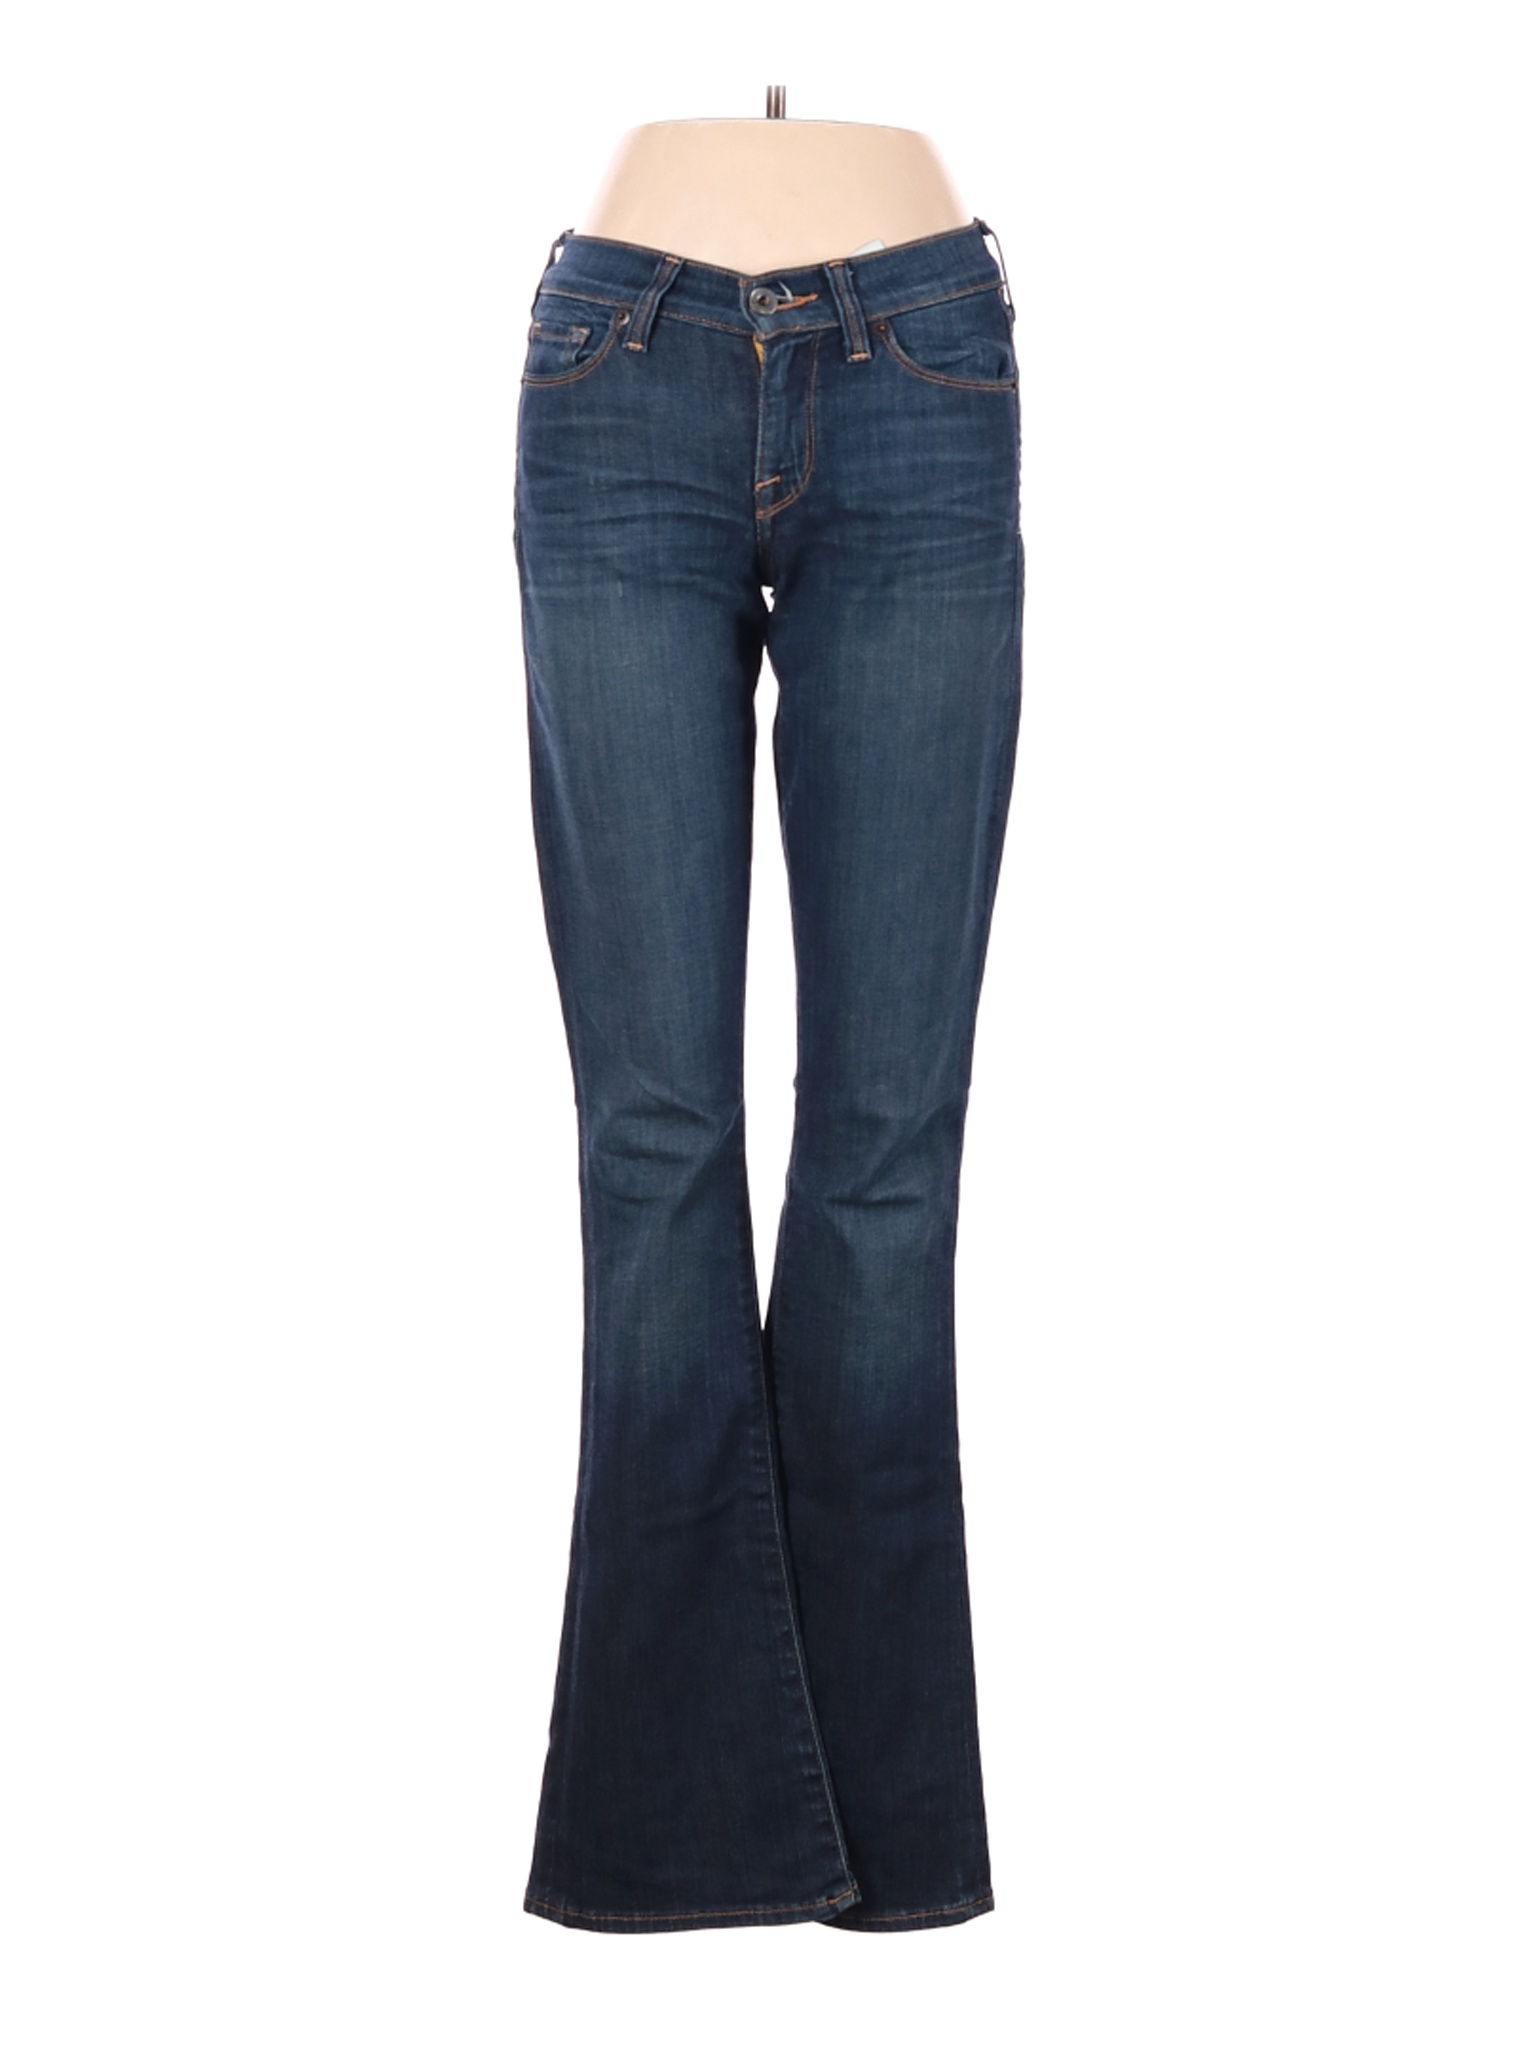 Lucky Brand Women Blue Jeans 0 | eBay